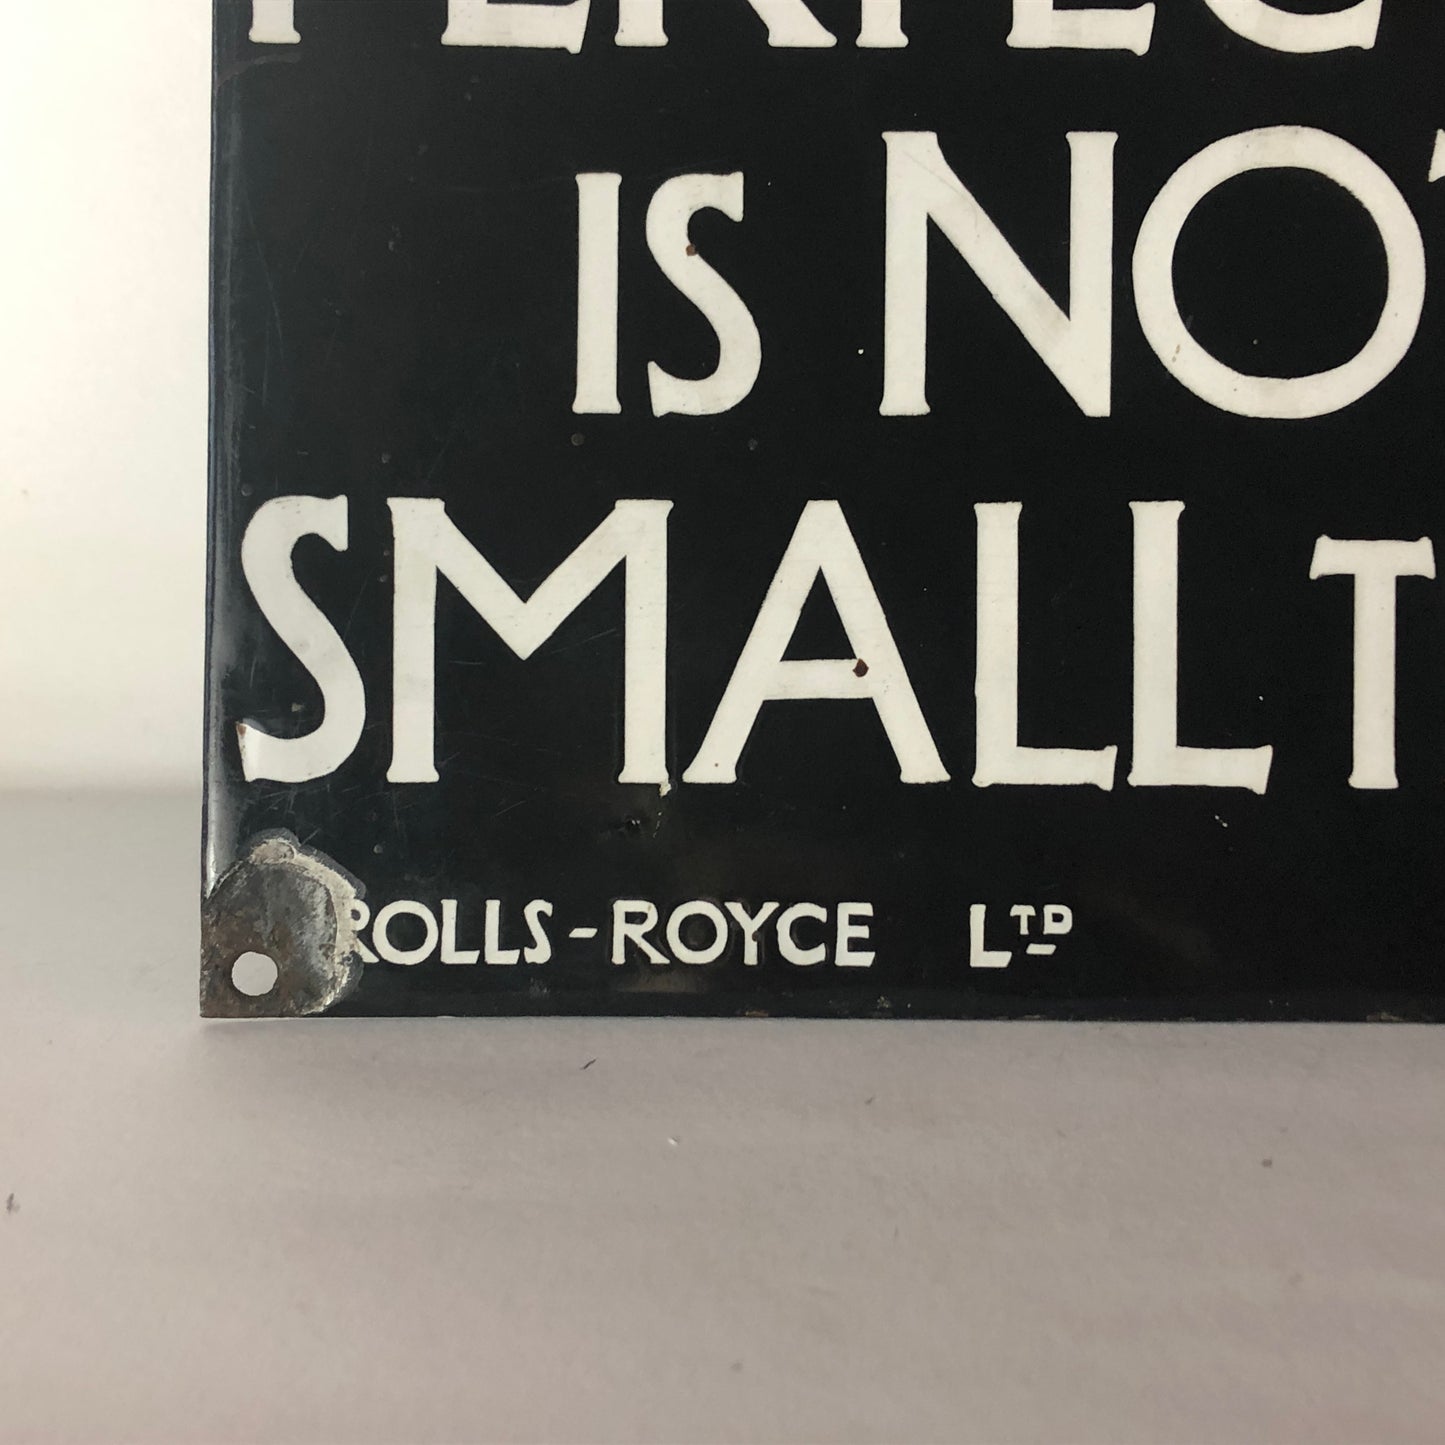 Rolls-Royce, Original Rolls-Royce Ltd. Vintage Enamel Plate Sign, 1930s